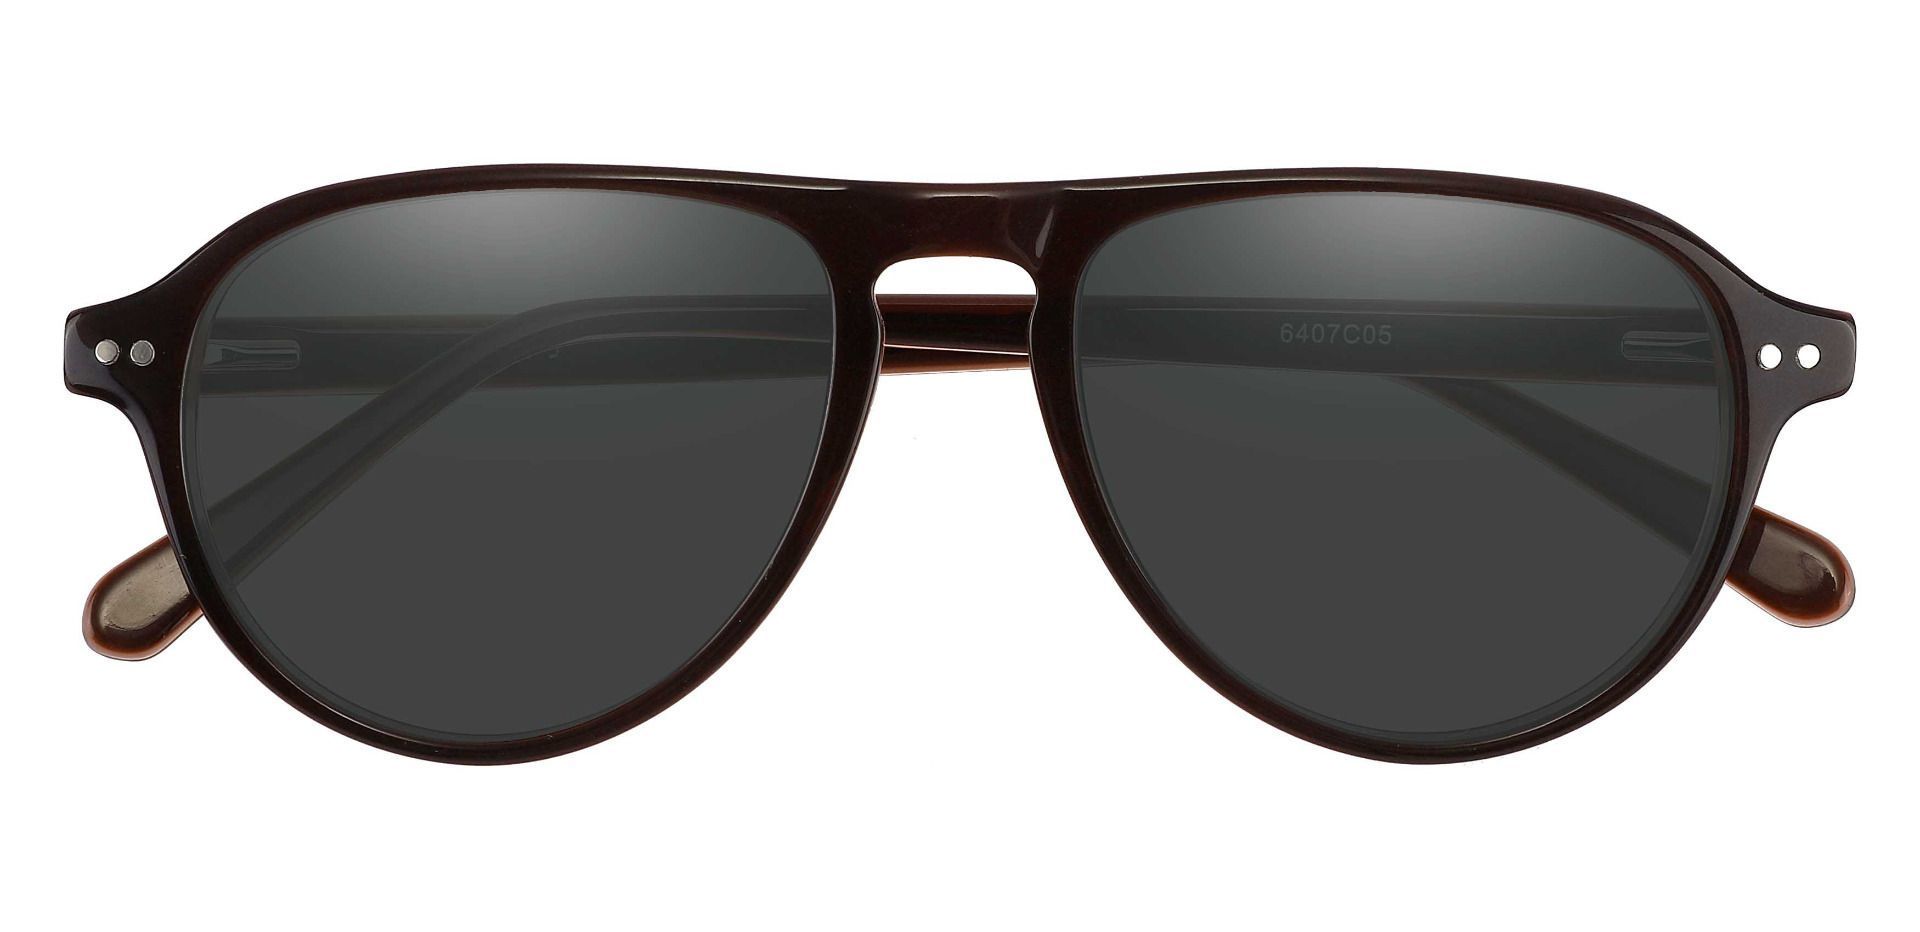 Durham Aviator Progressive Sunglasses - Brown Frame With Gray Lenses